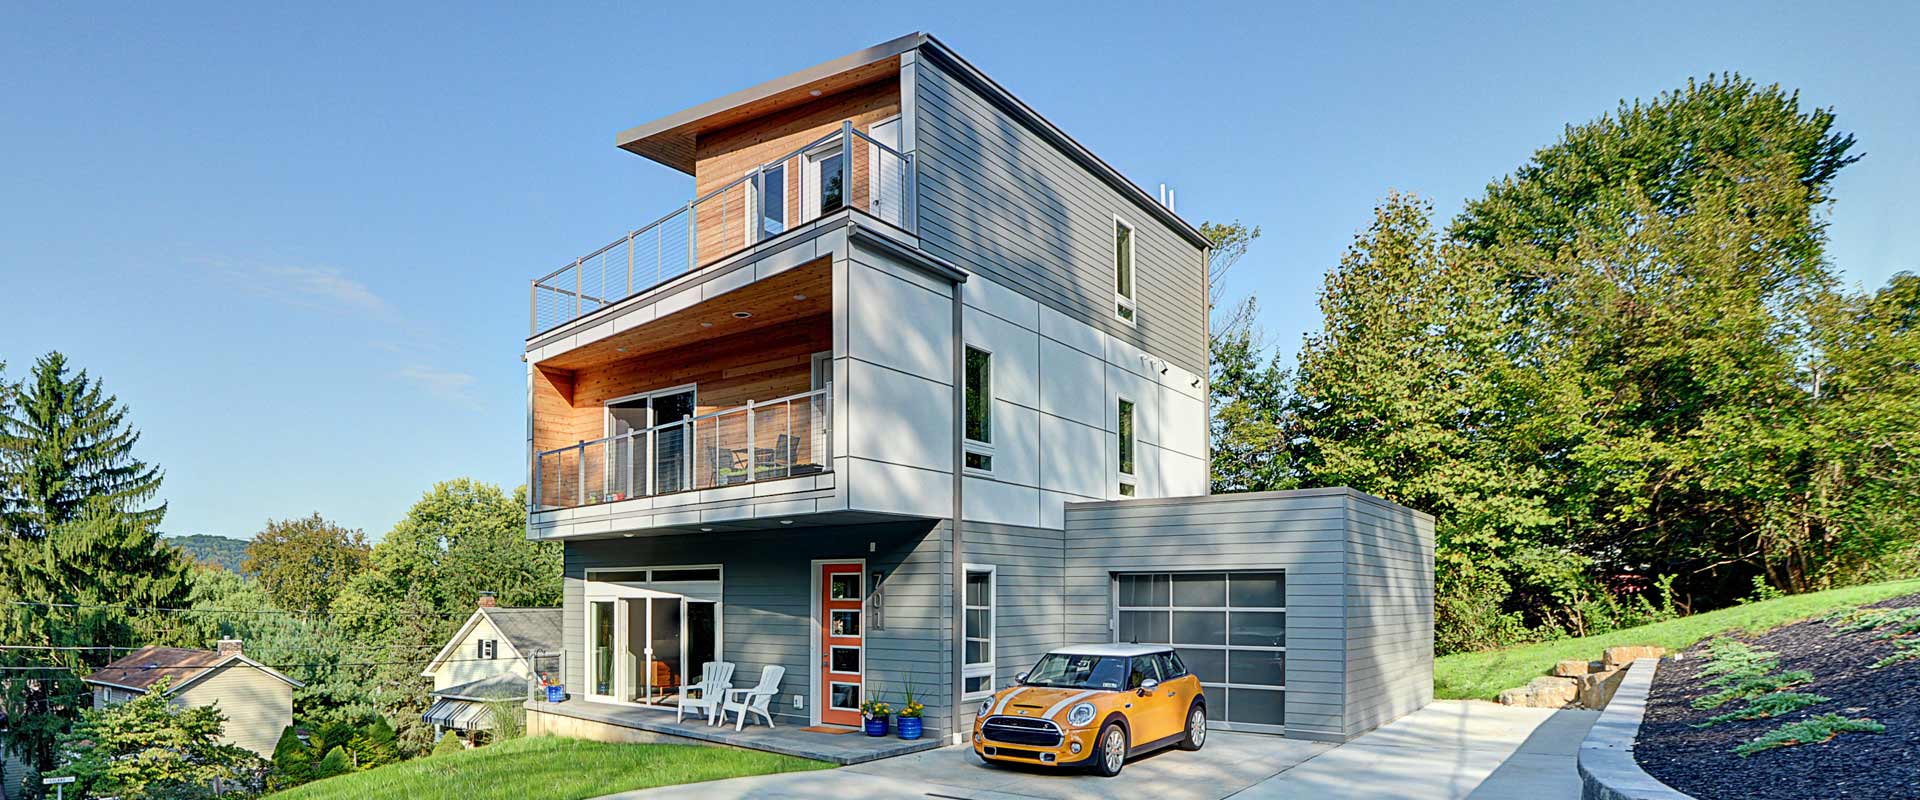 Luxurious Modern Contemporary Home Design